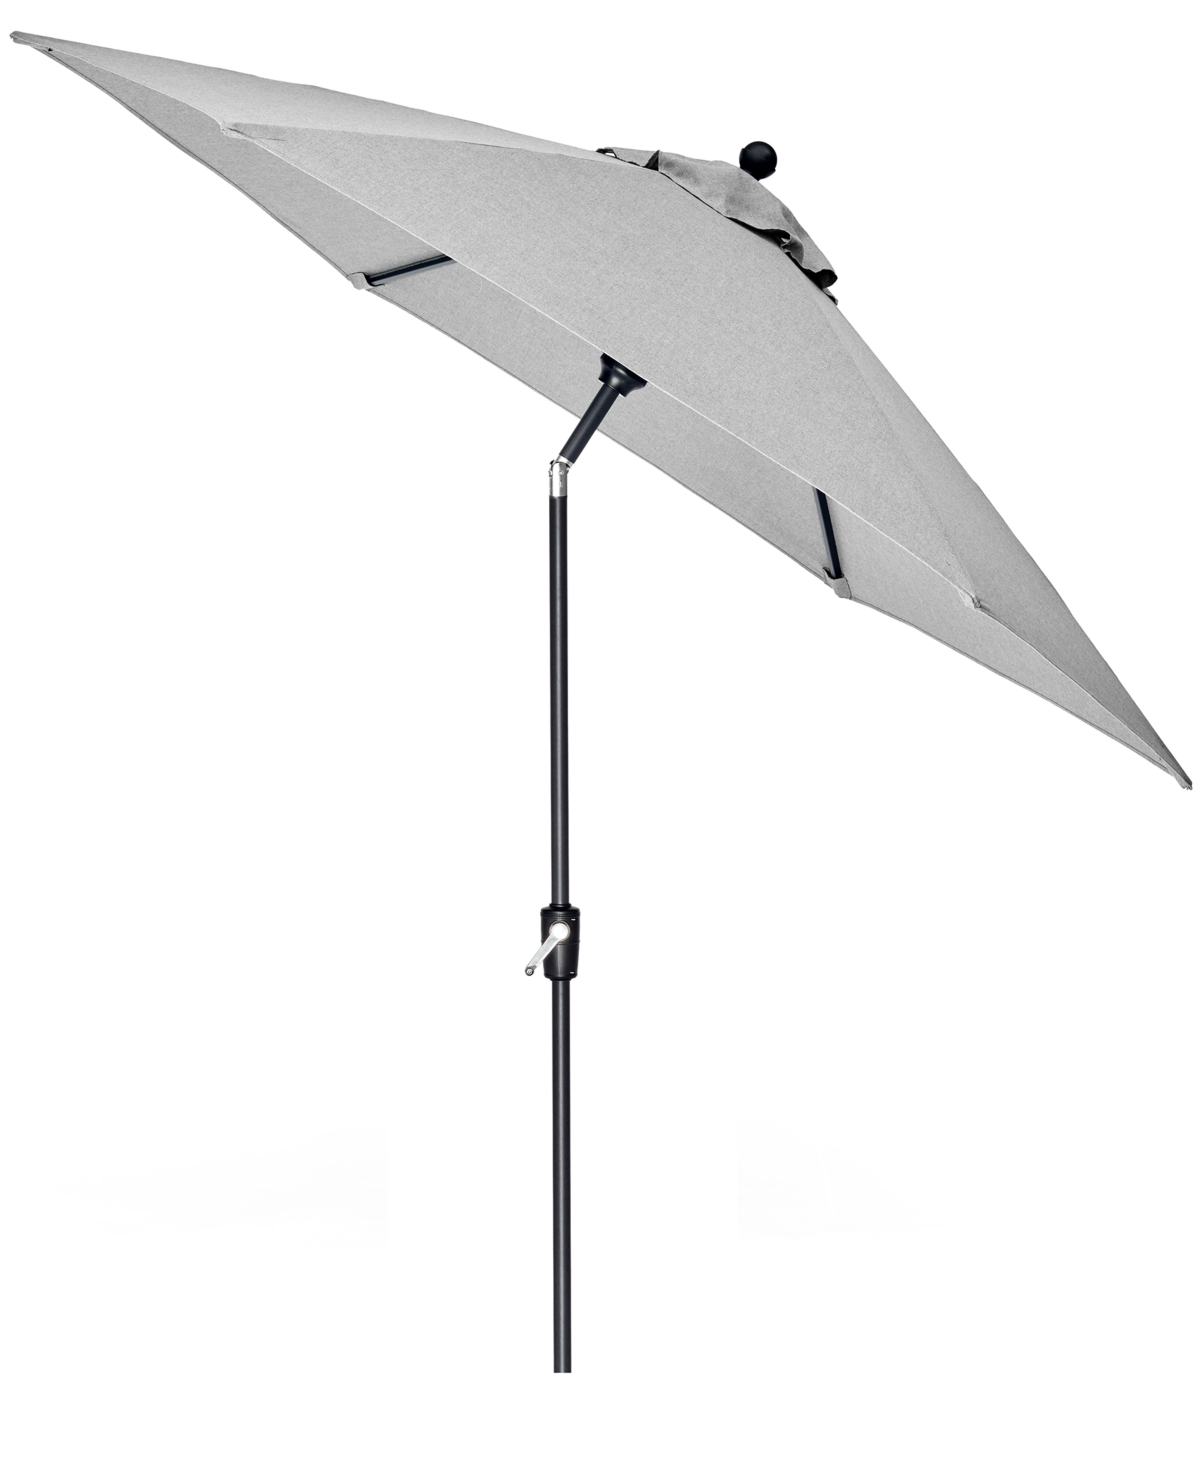 Vintage Outdoor 9 Umbrella, Created for Macys